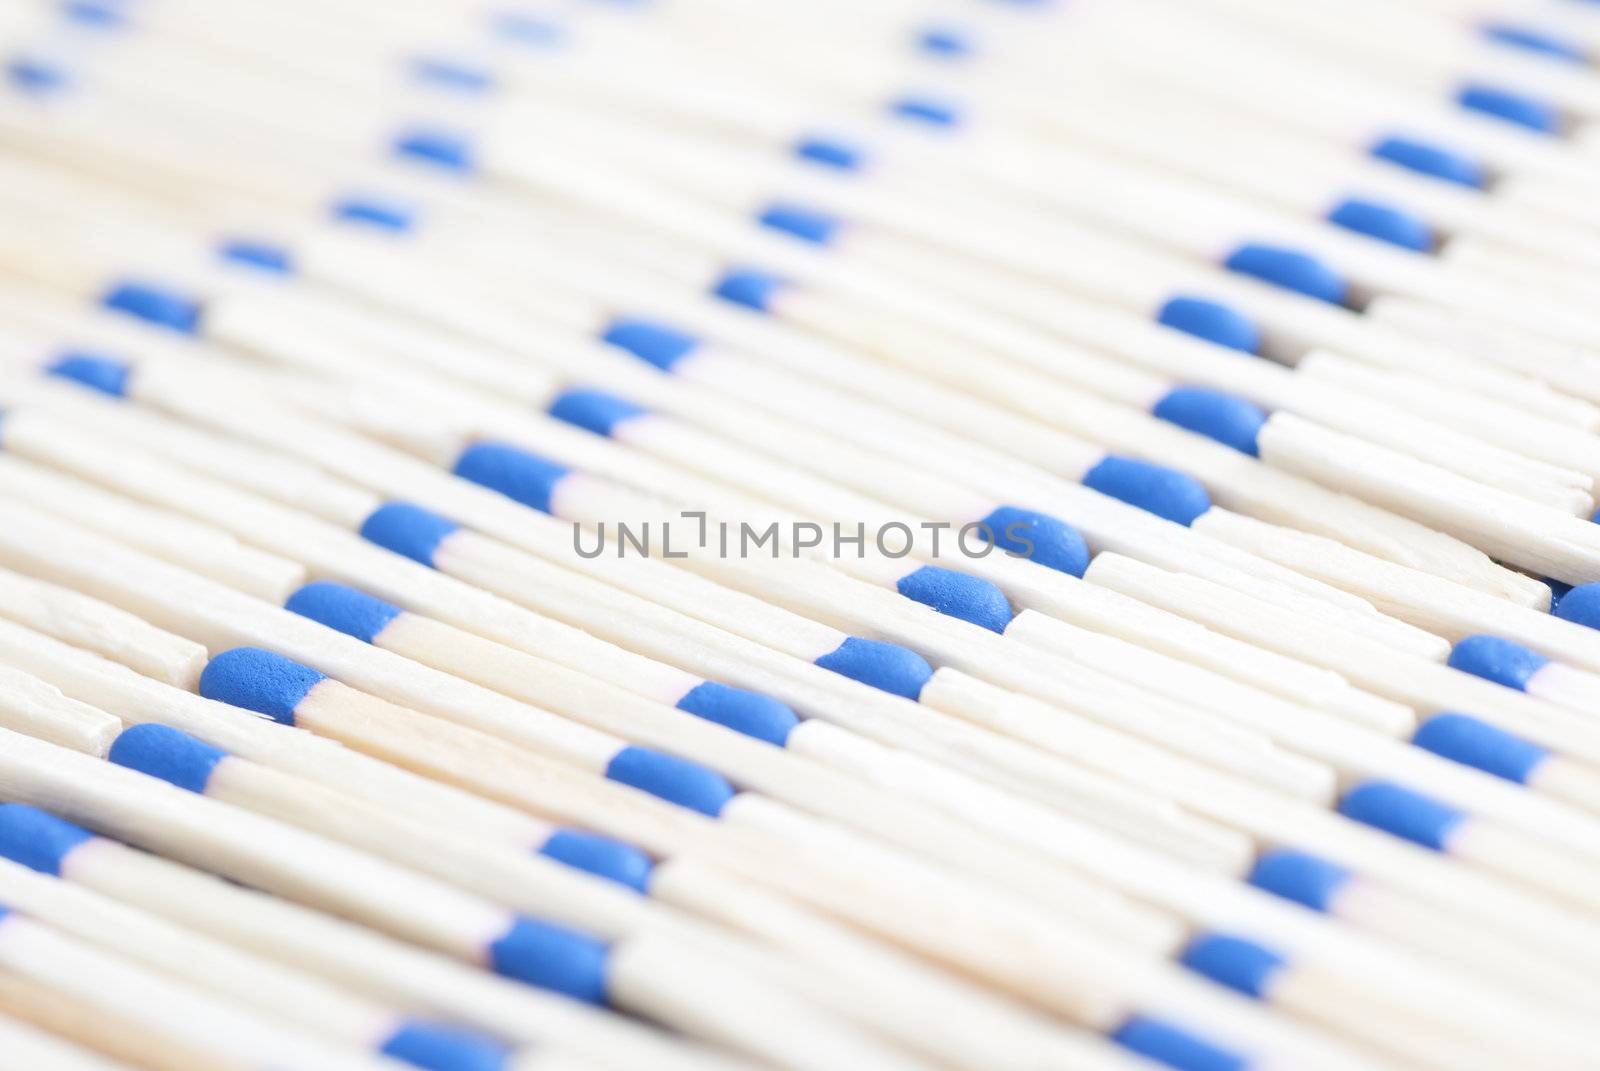 Line up of blue-headed matchsticks